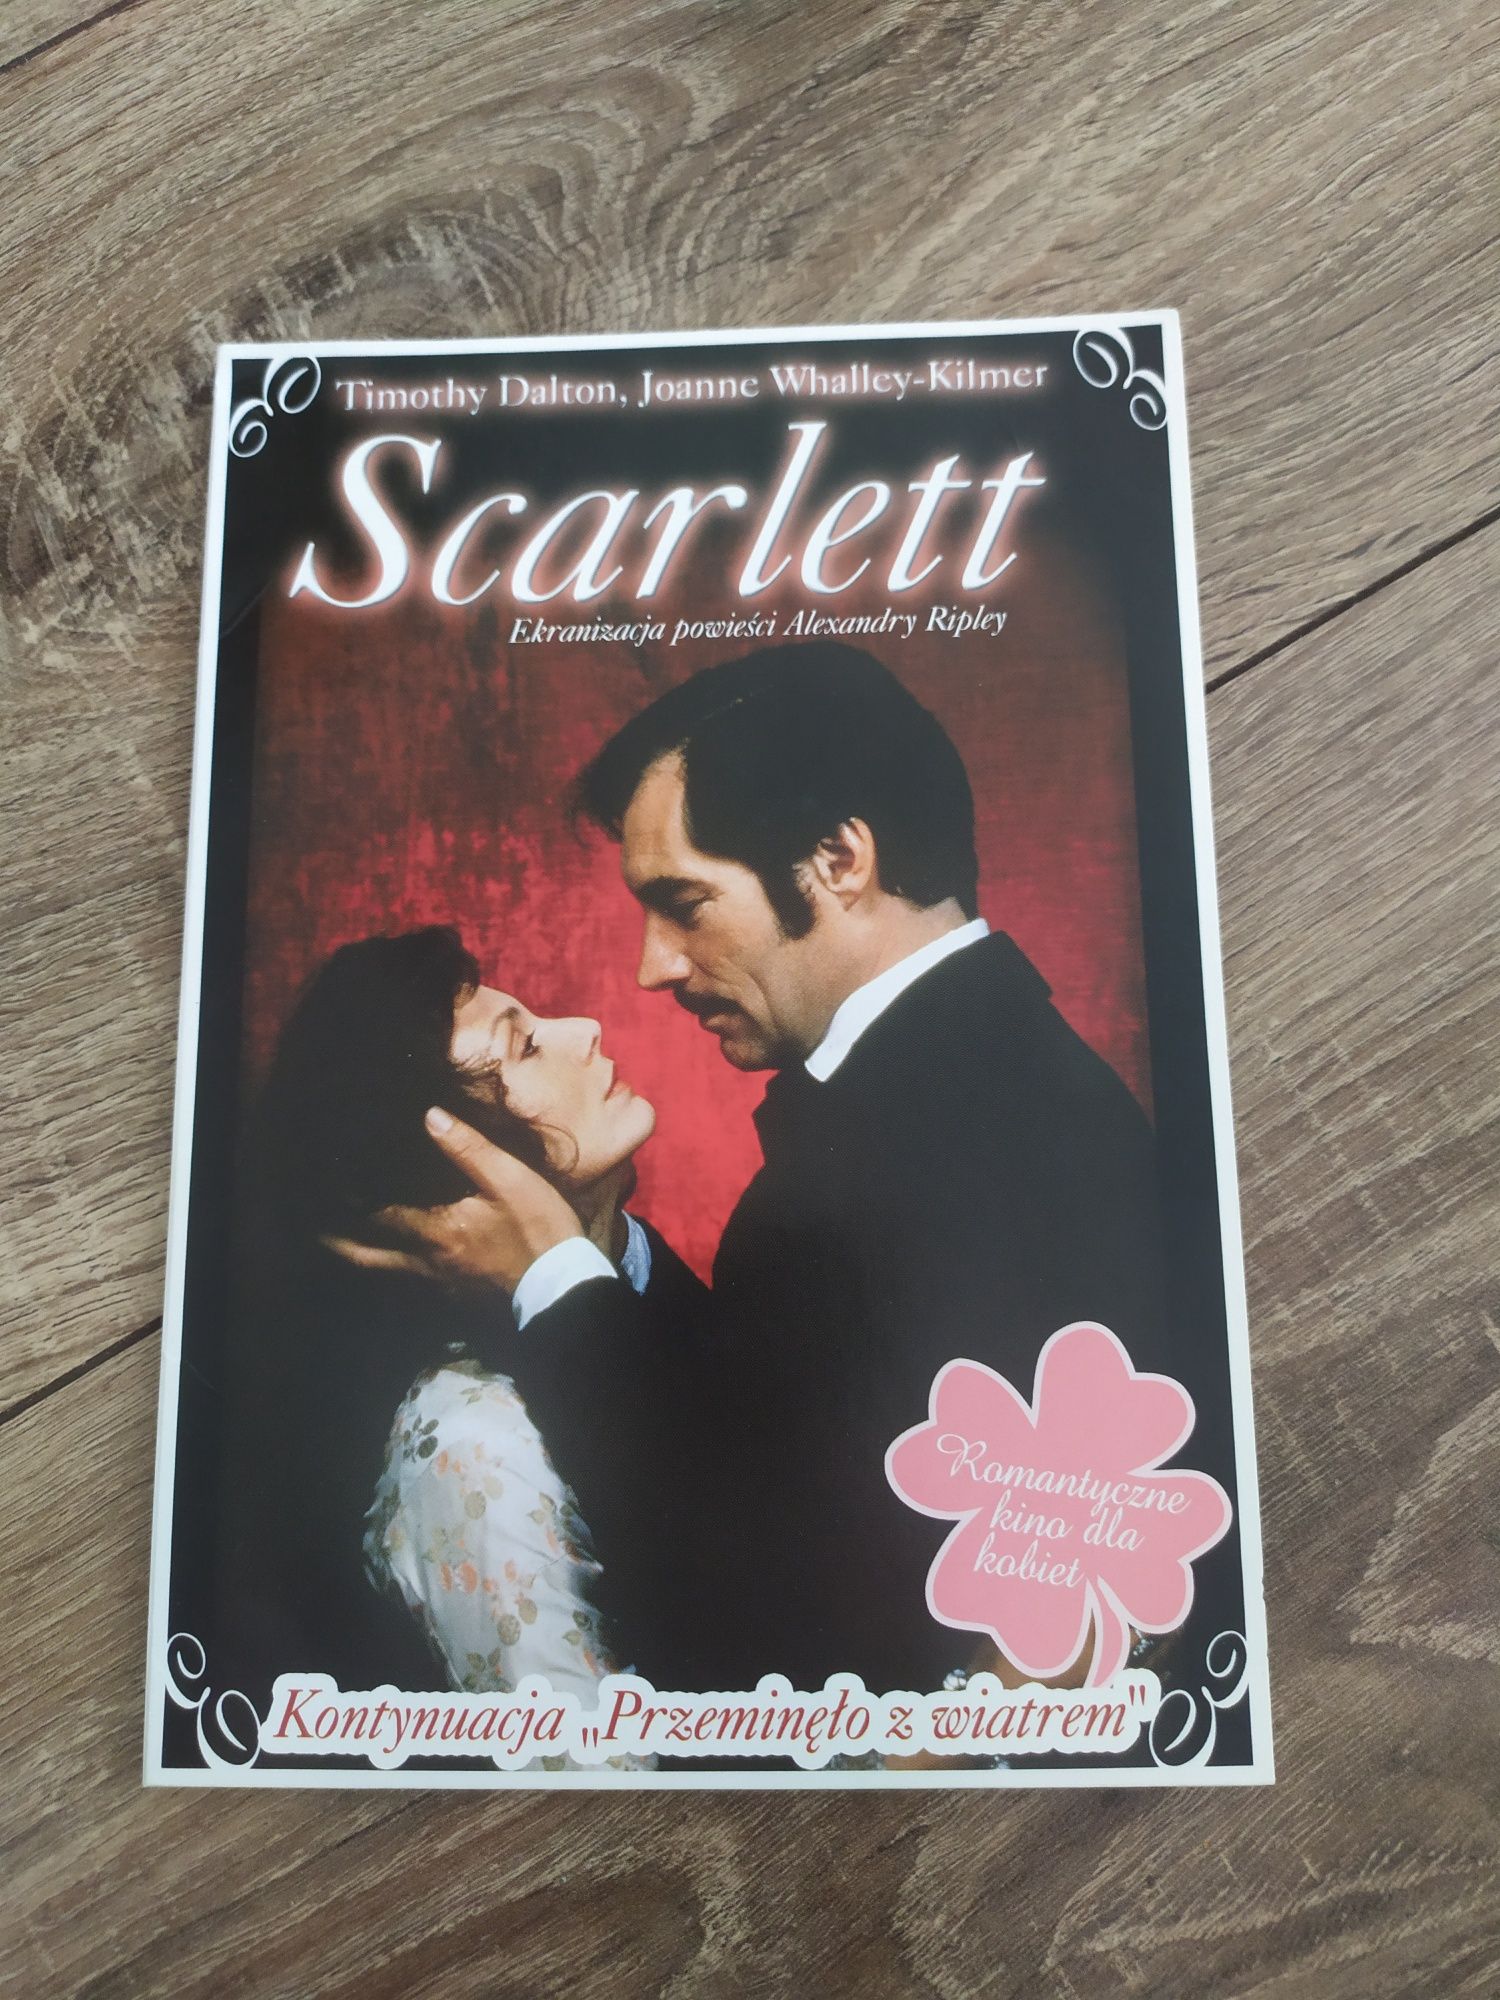 Film VCD "Scarlett"